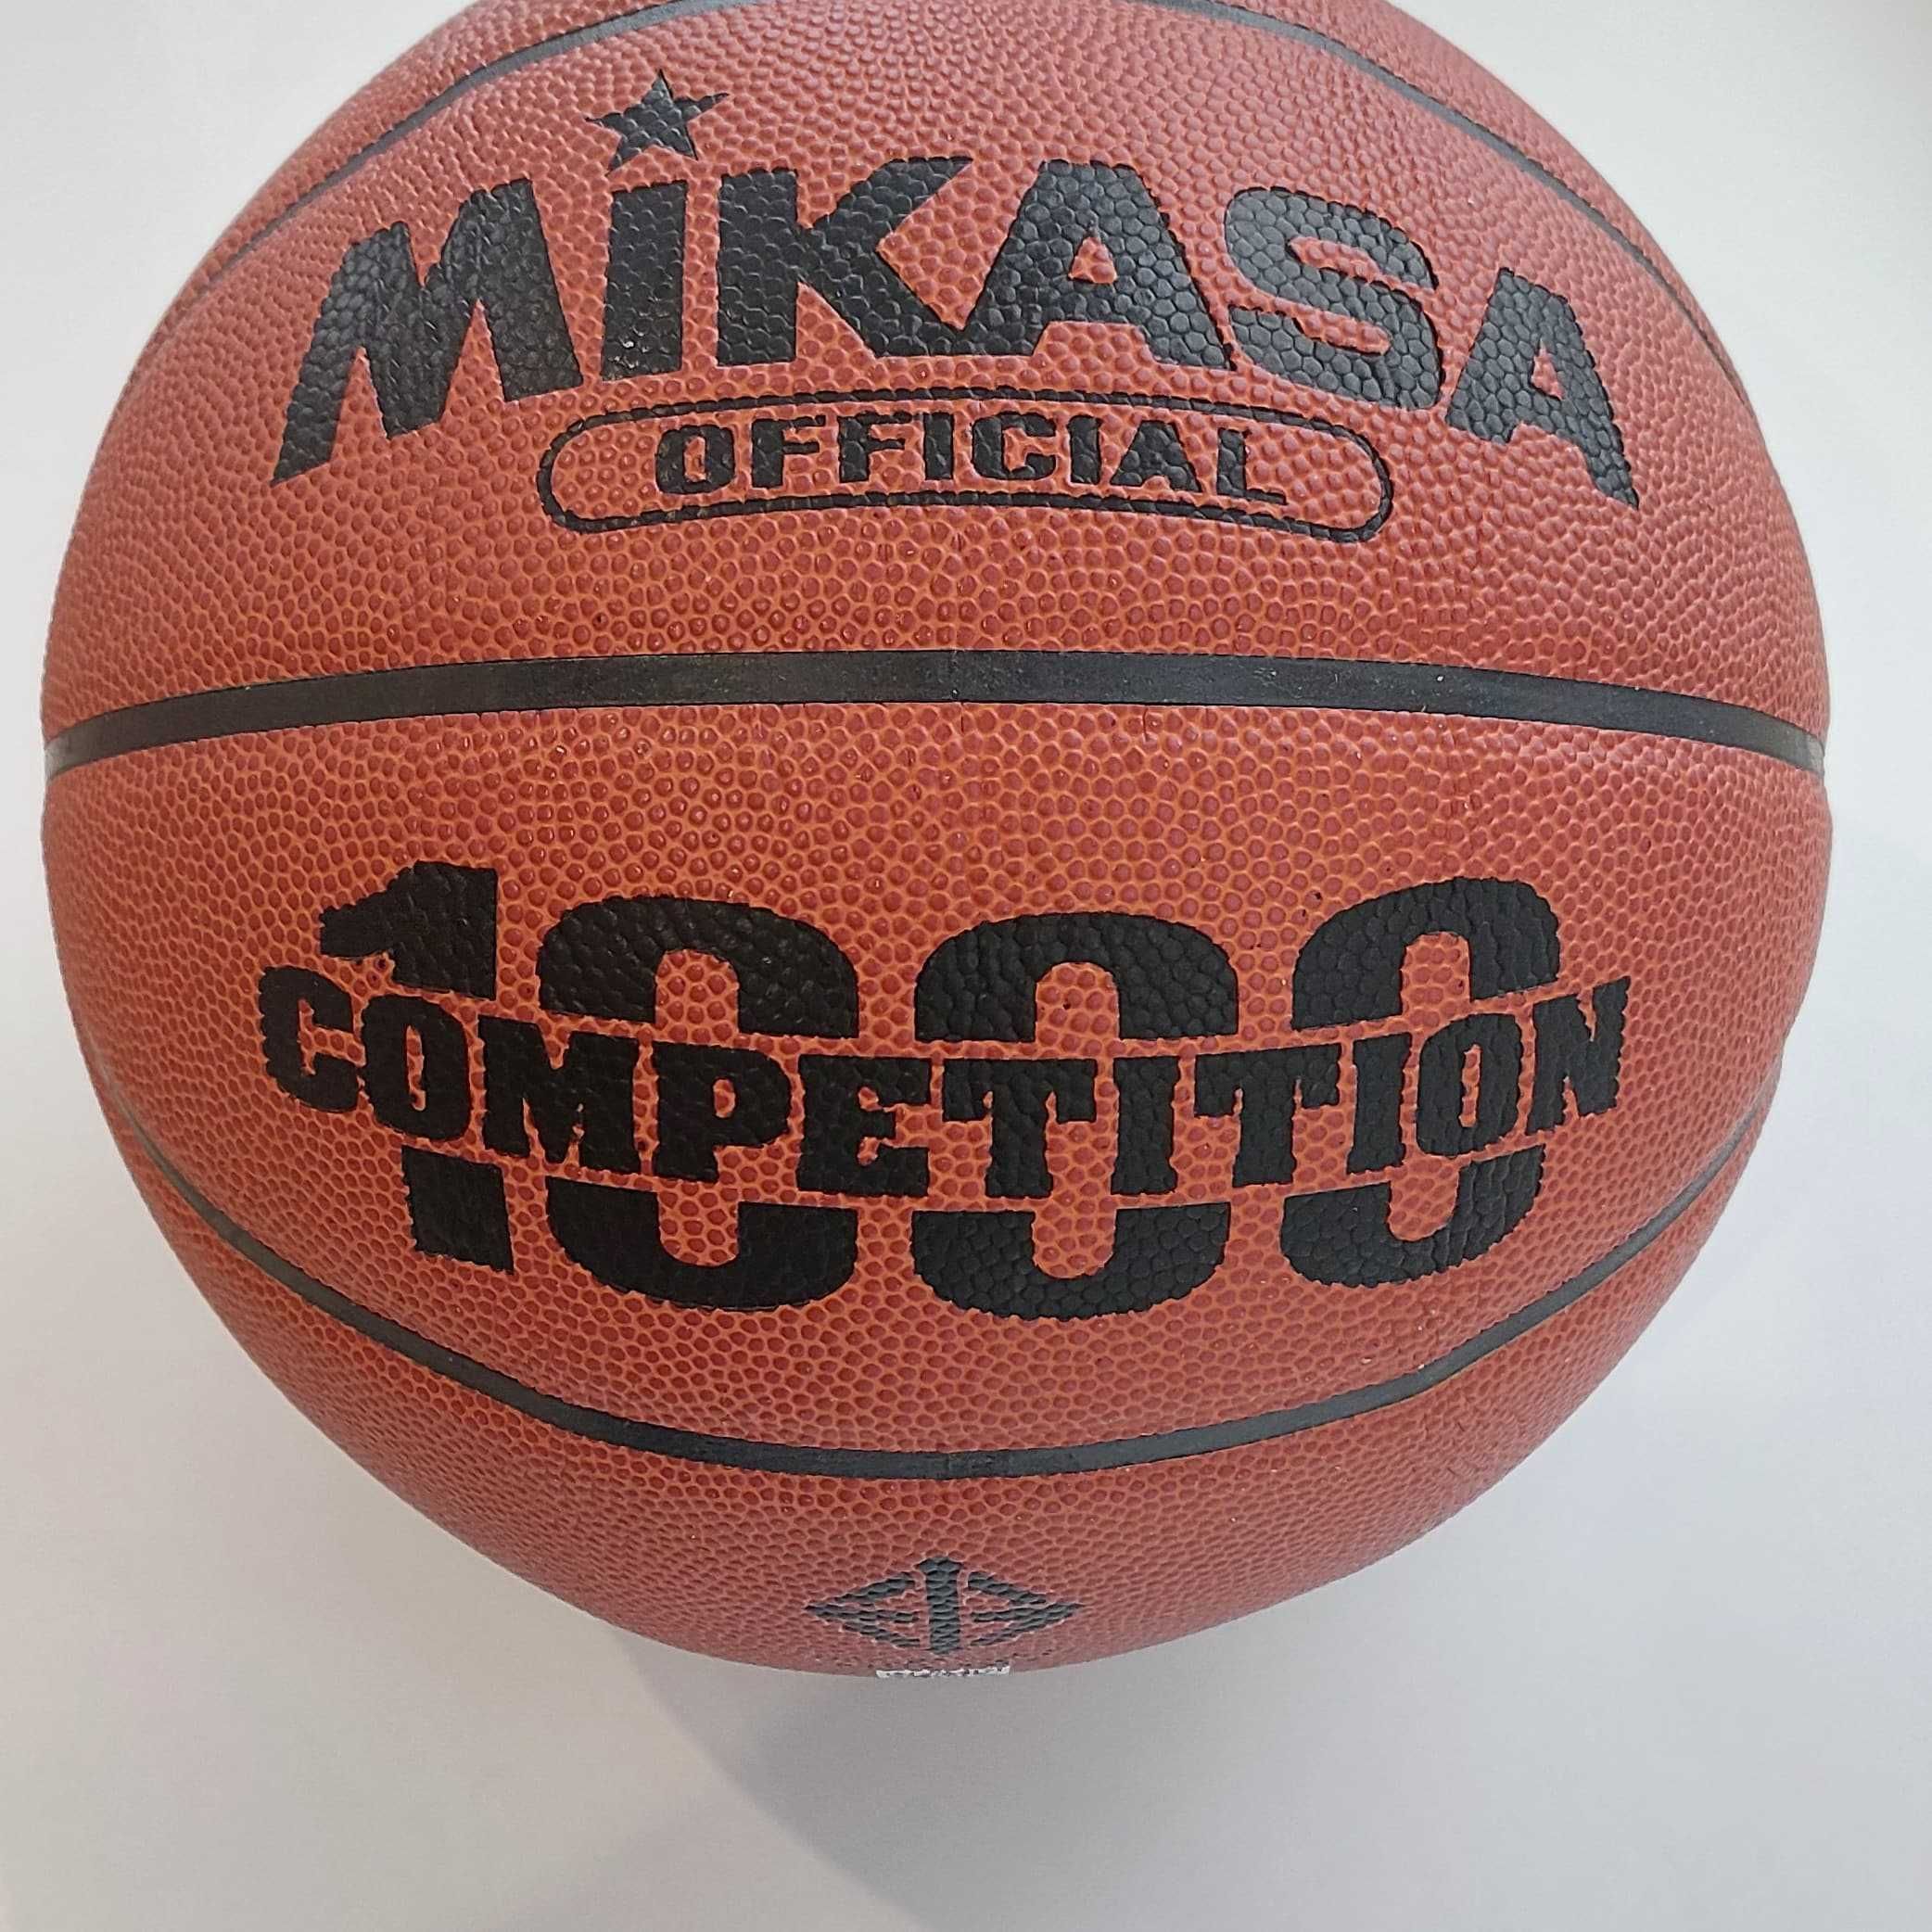 Mikasa v300w/v200w волейбольные мячи